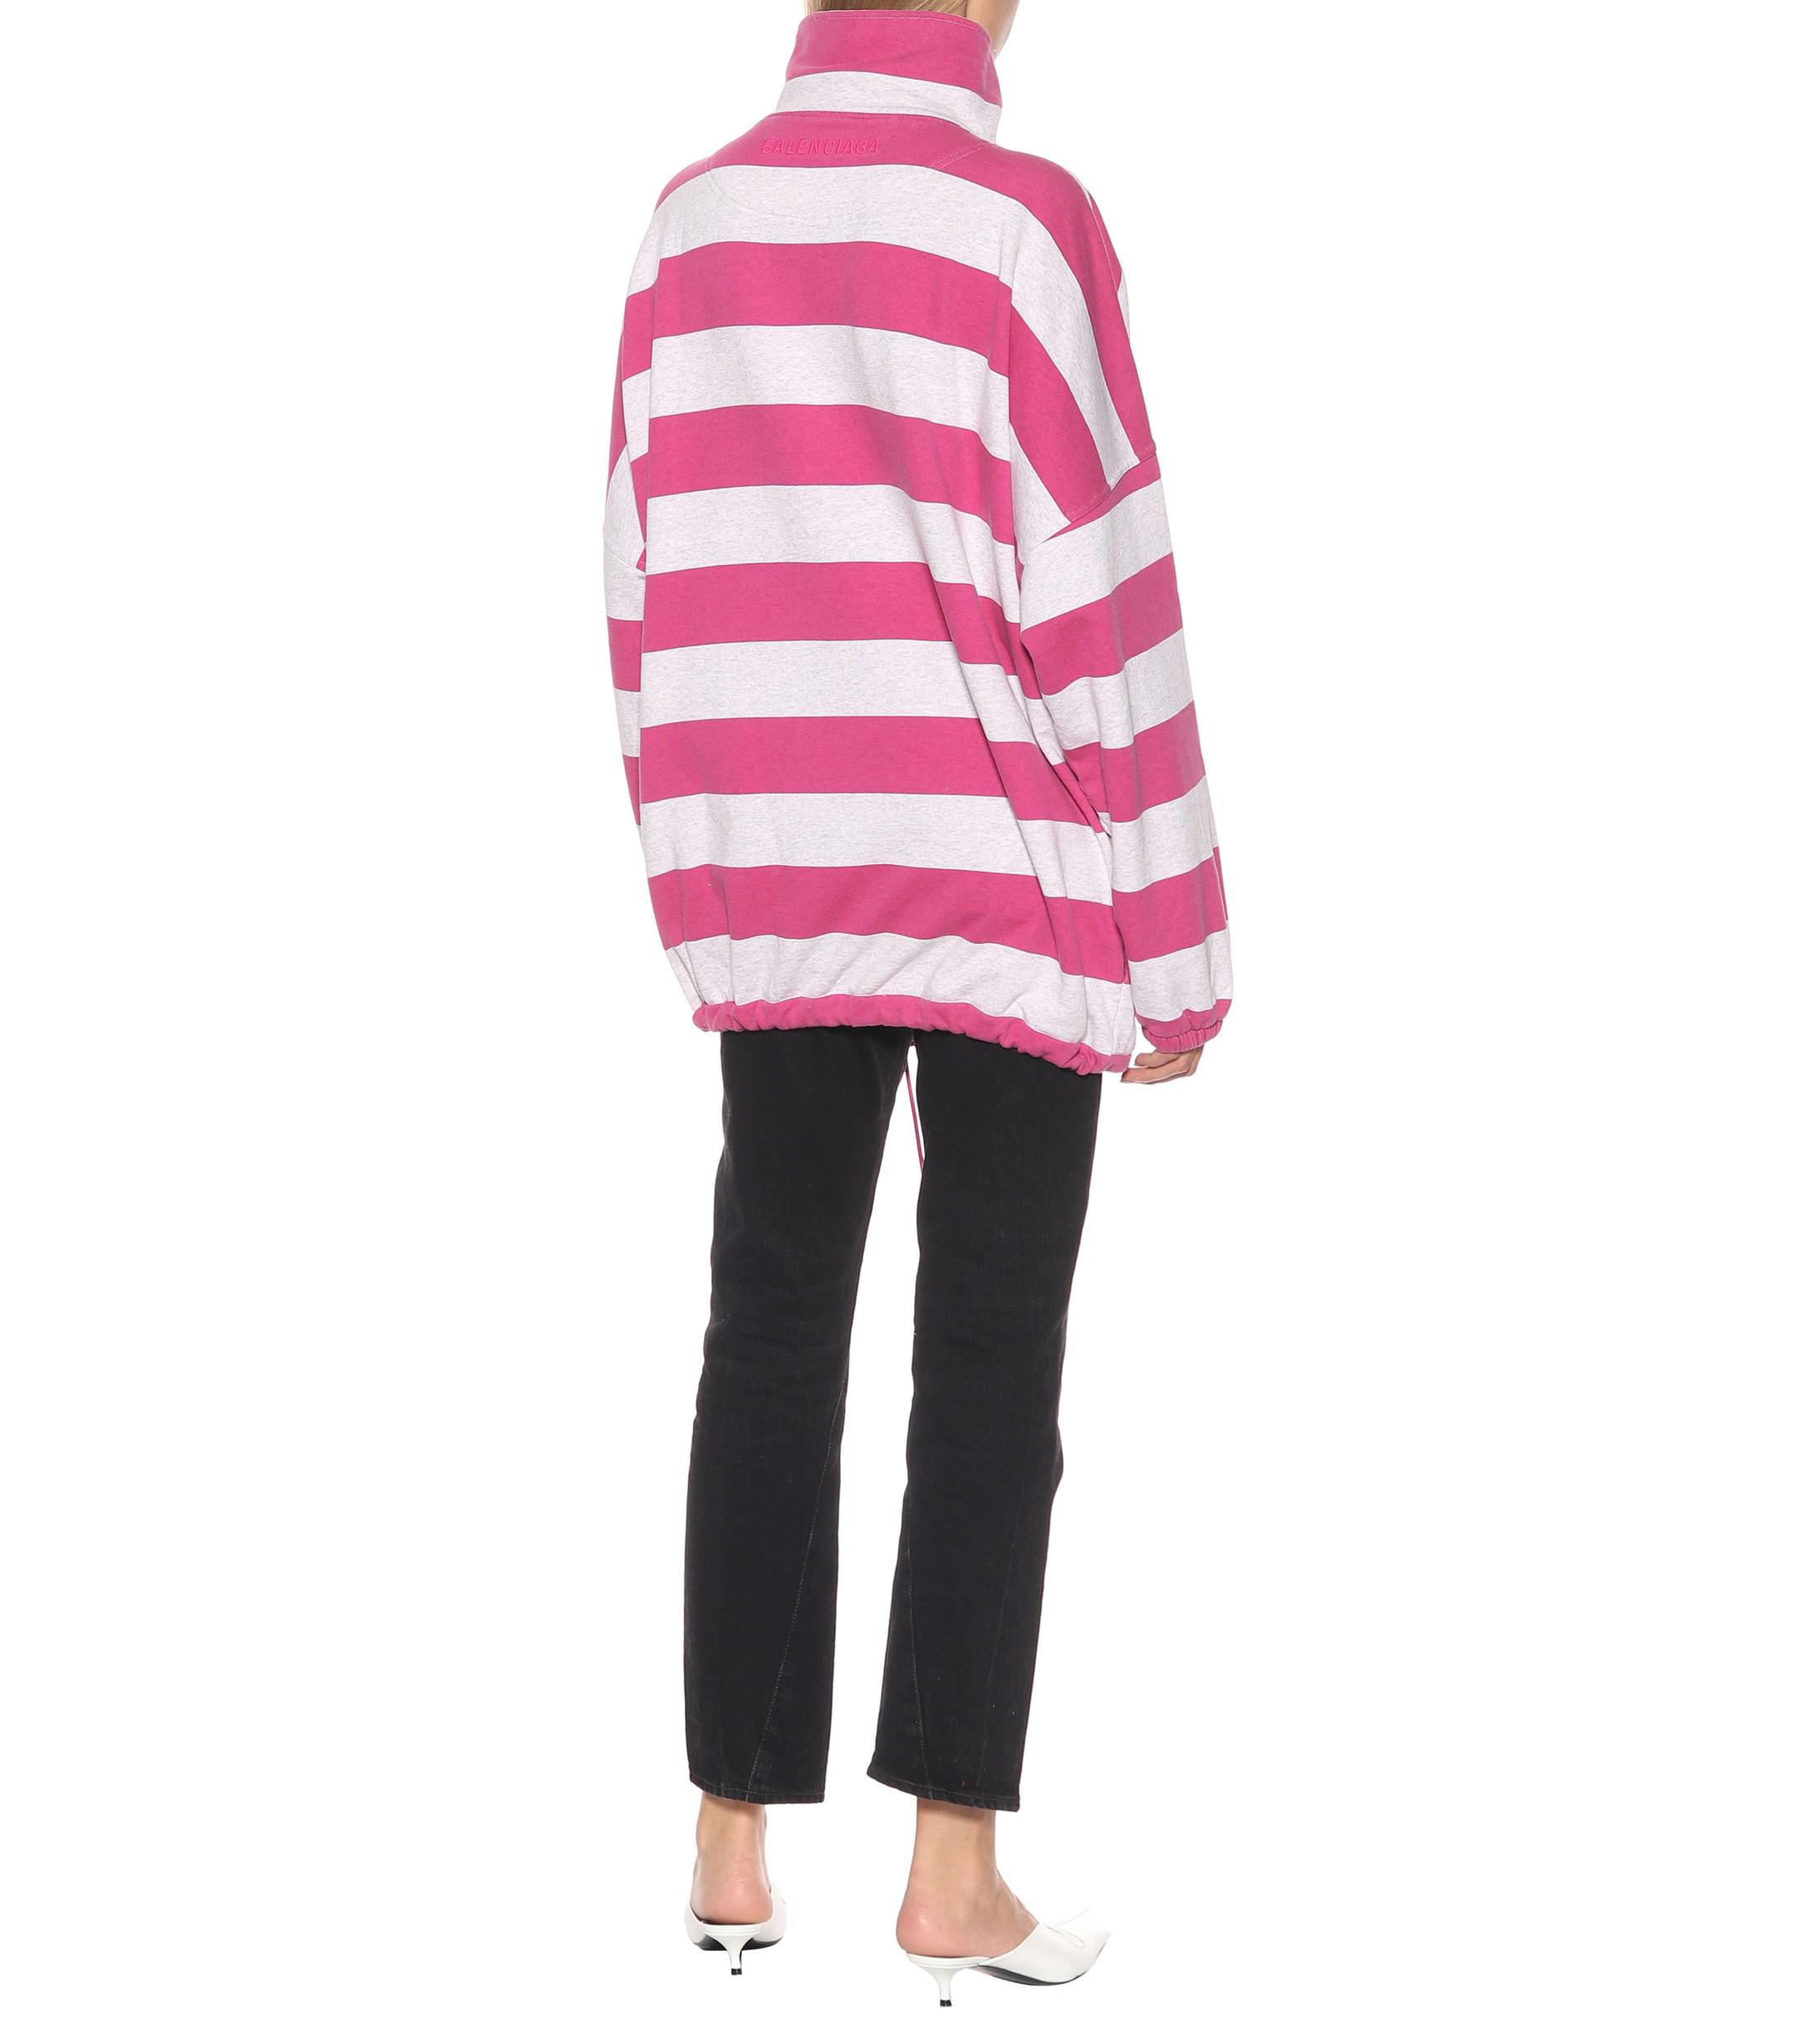 balenciaga striped sweater